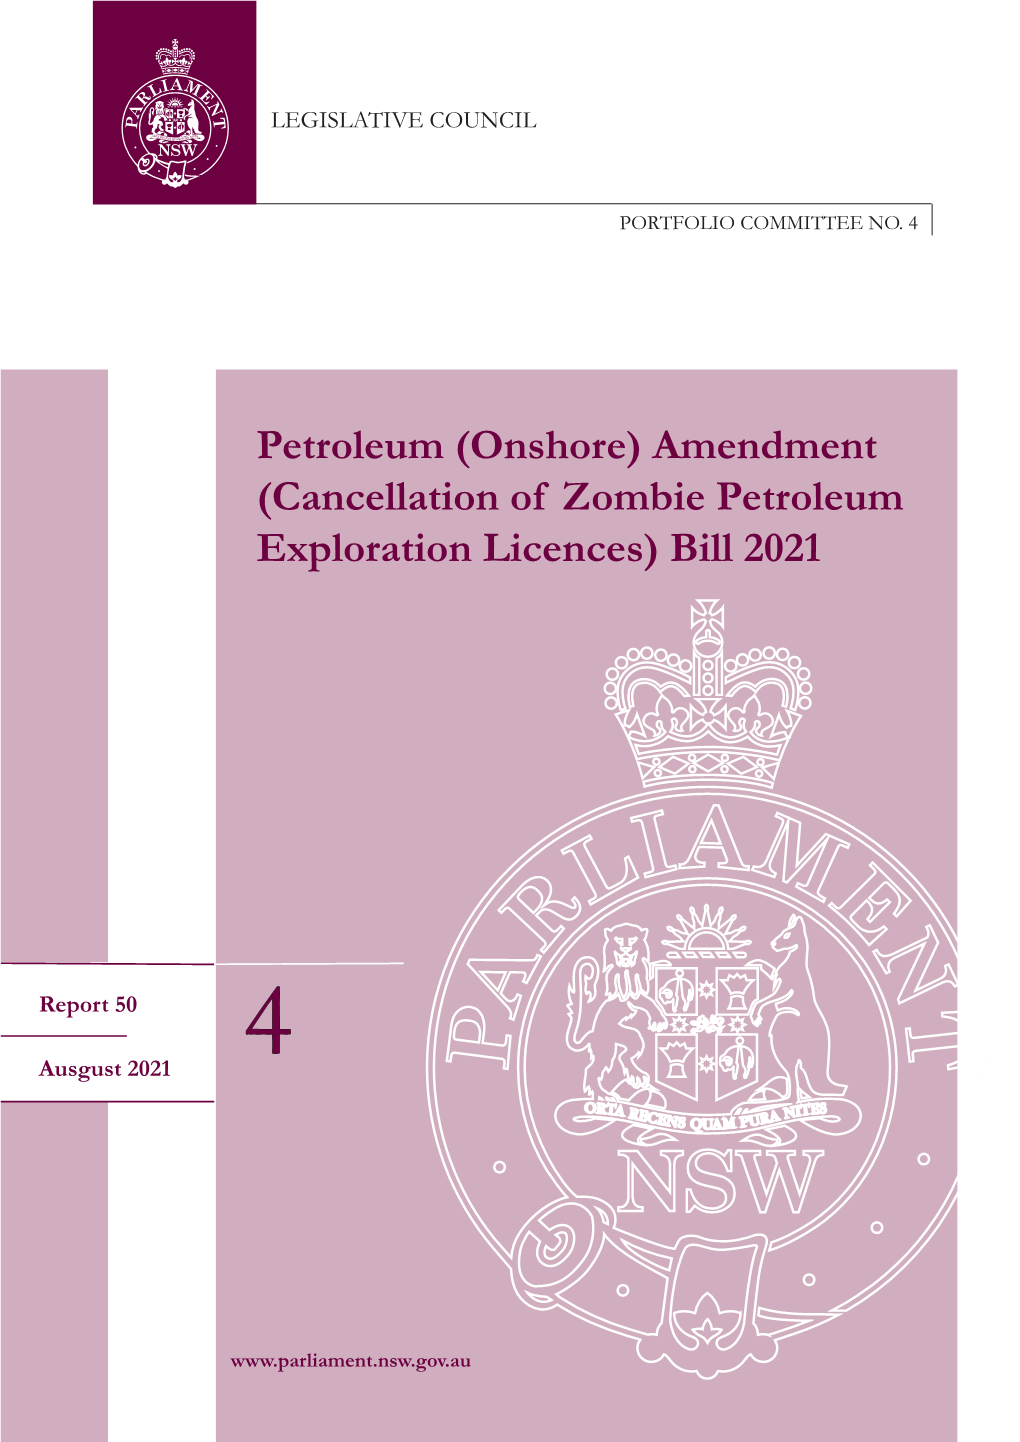 Petroleum (Onshore) Amendment (Cancellation of Zombie Petroleum Exploration Licences) Bill 2021